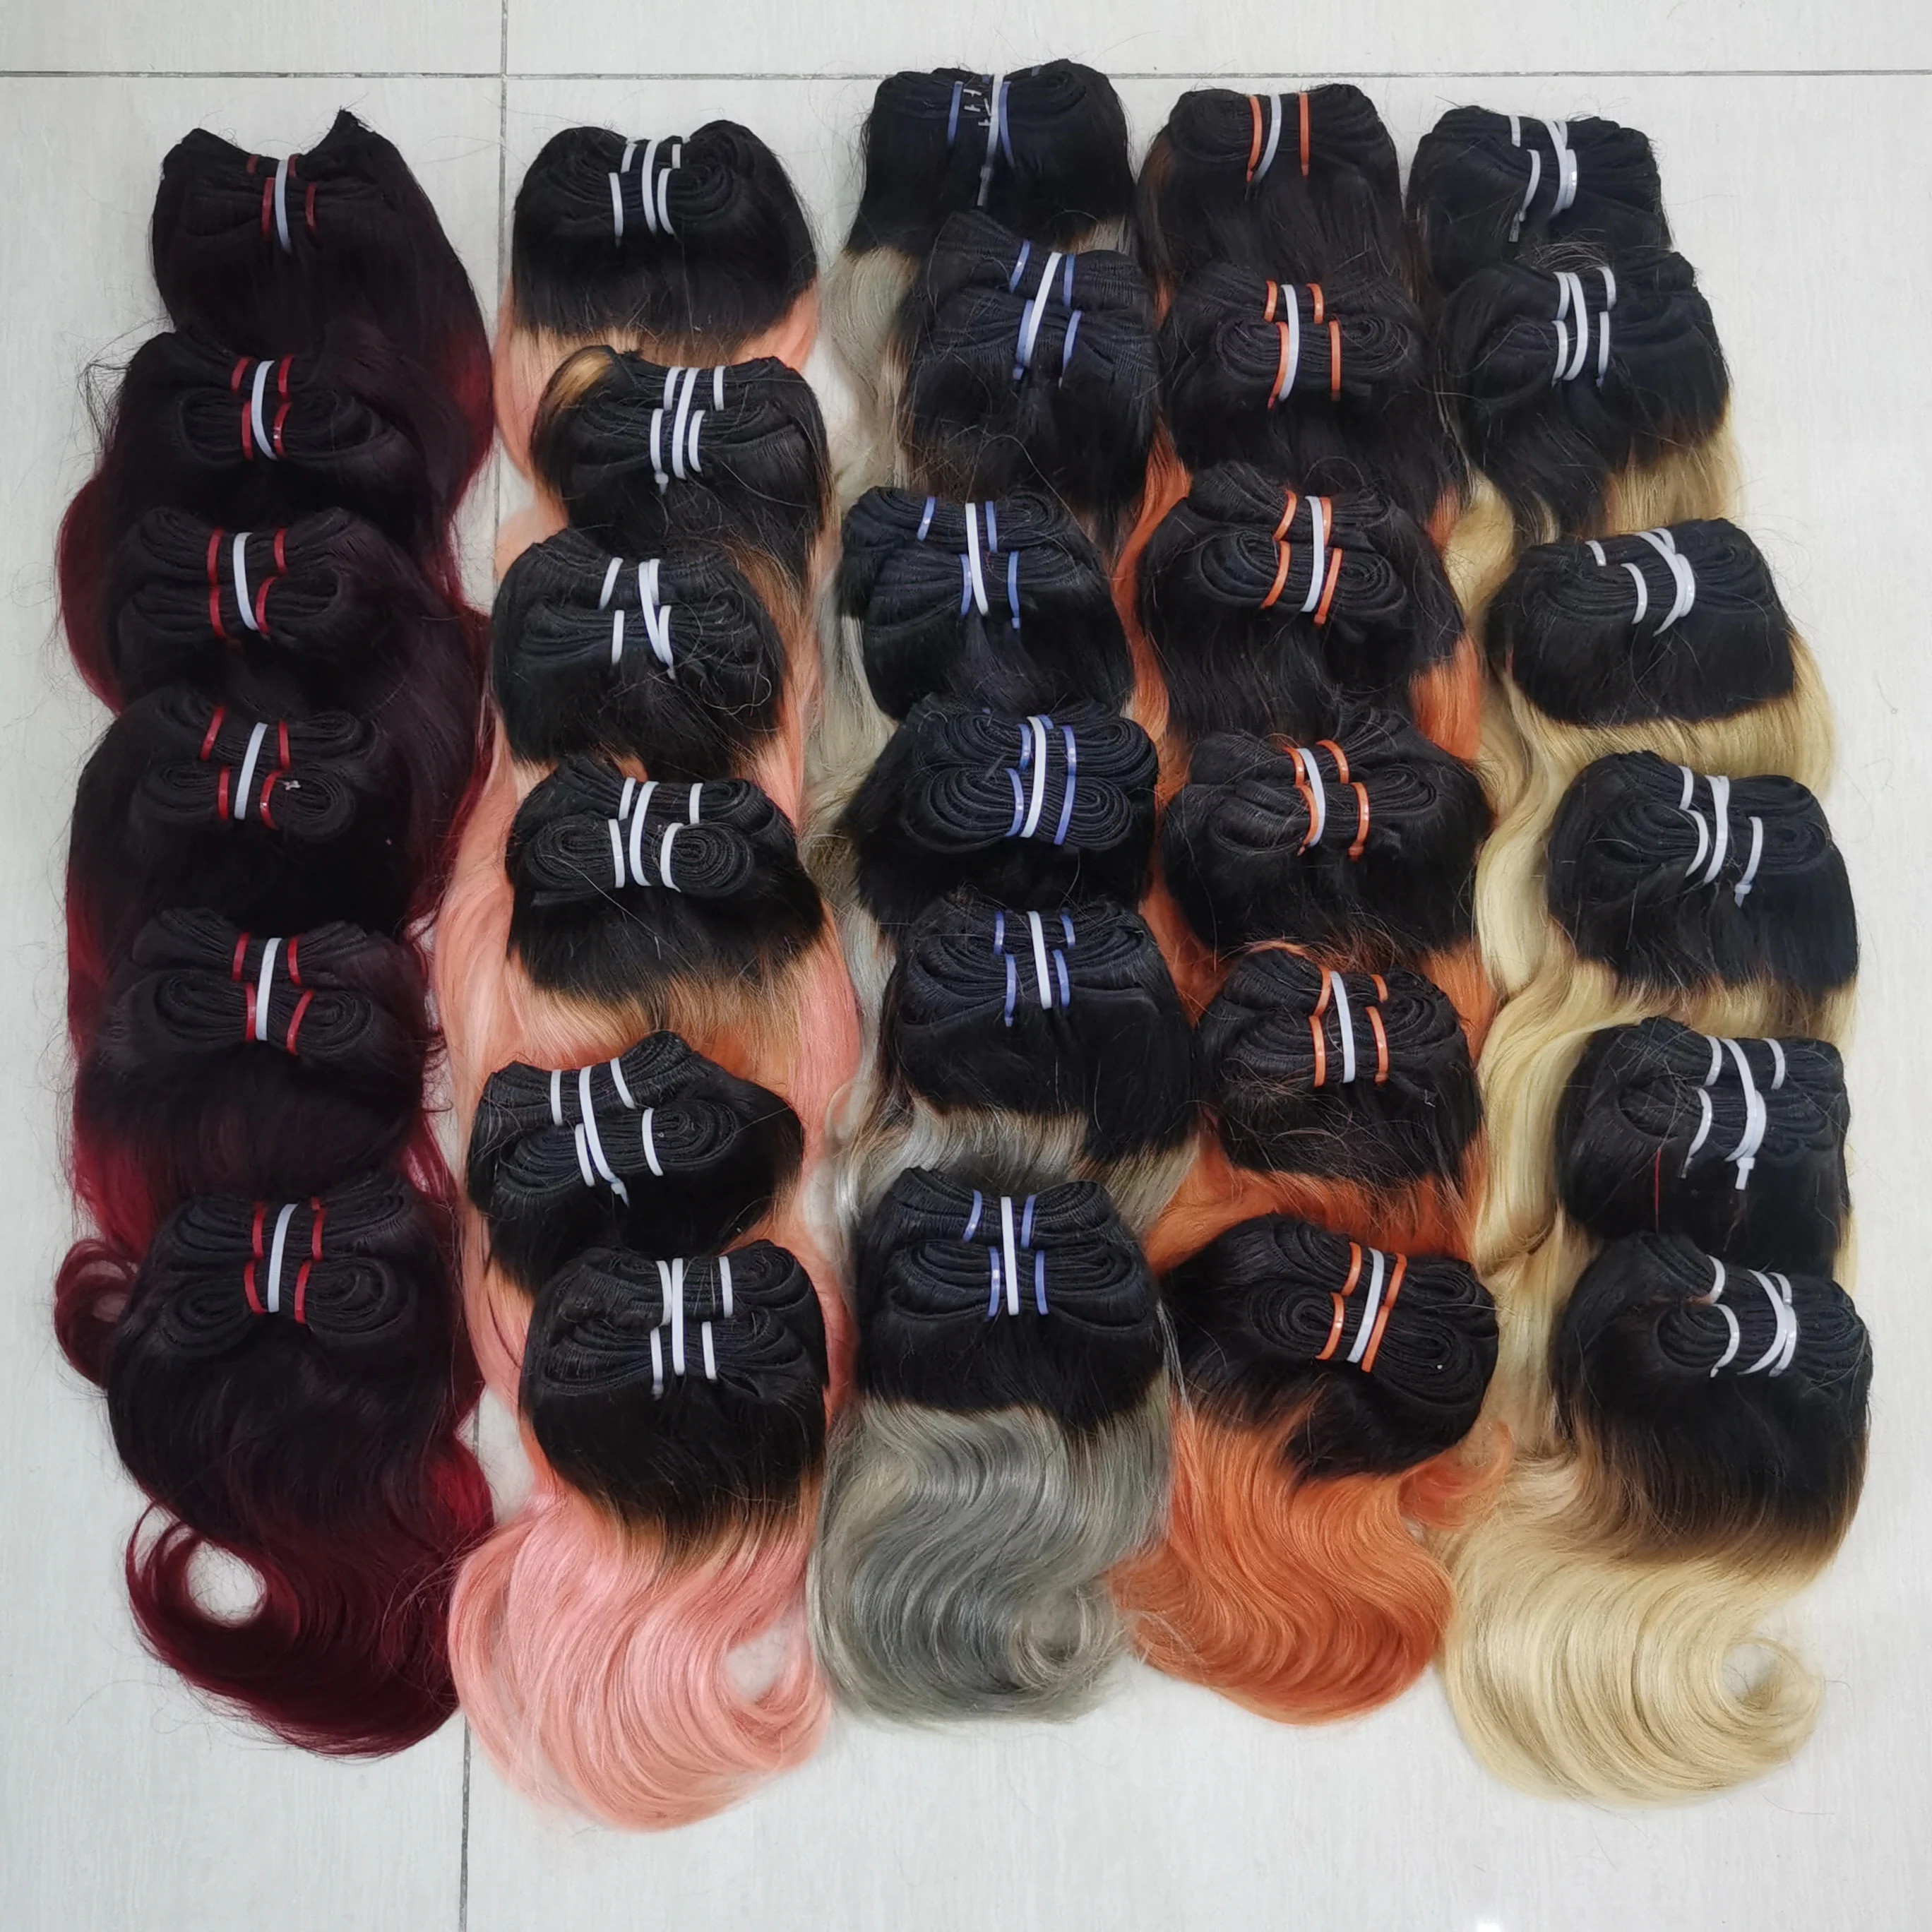 

Letsfly 9A High Quality Virgin Human Hair Body Wavy Color Hair Bundles Weft 70gram Wavy 10inch Hair Extension Free Shipping